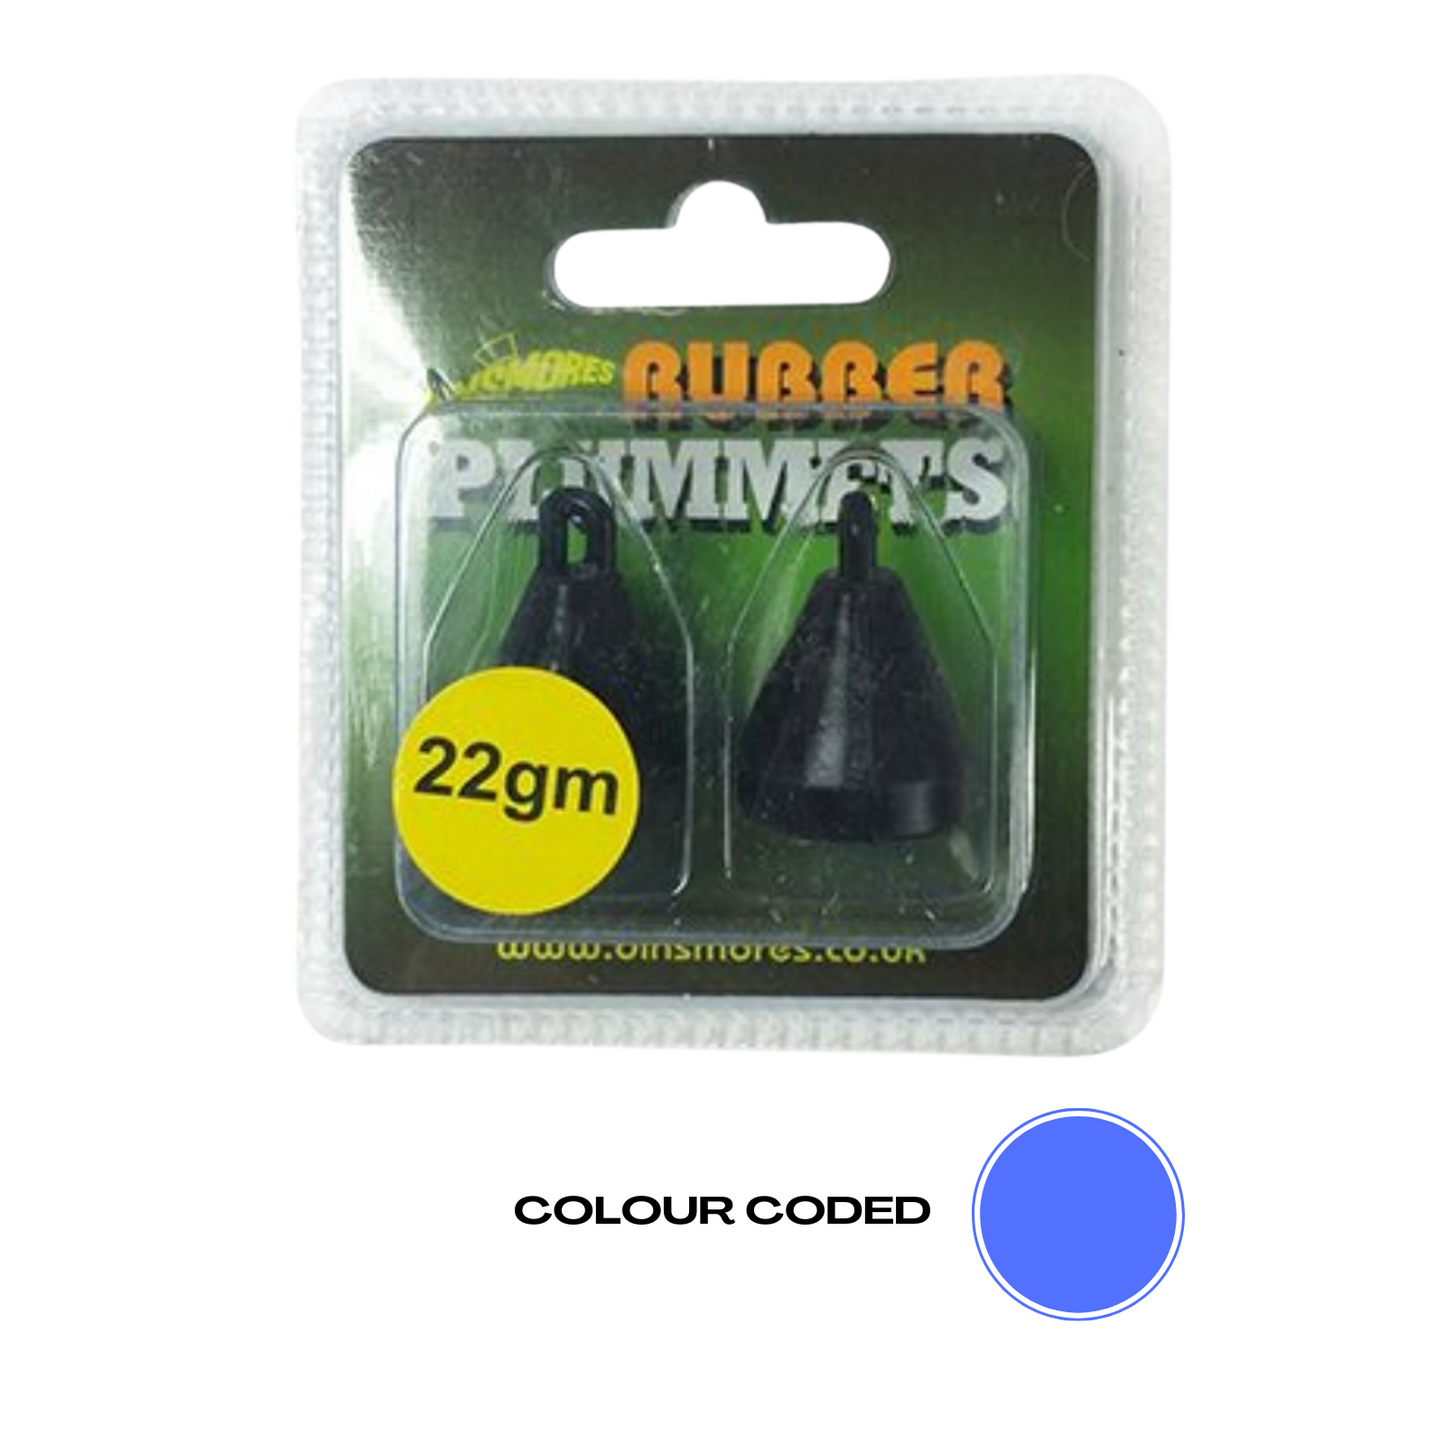 Dinsmores Rubber Plummets - Twin Pack - 2 Options